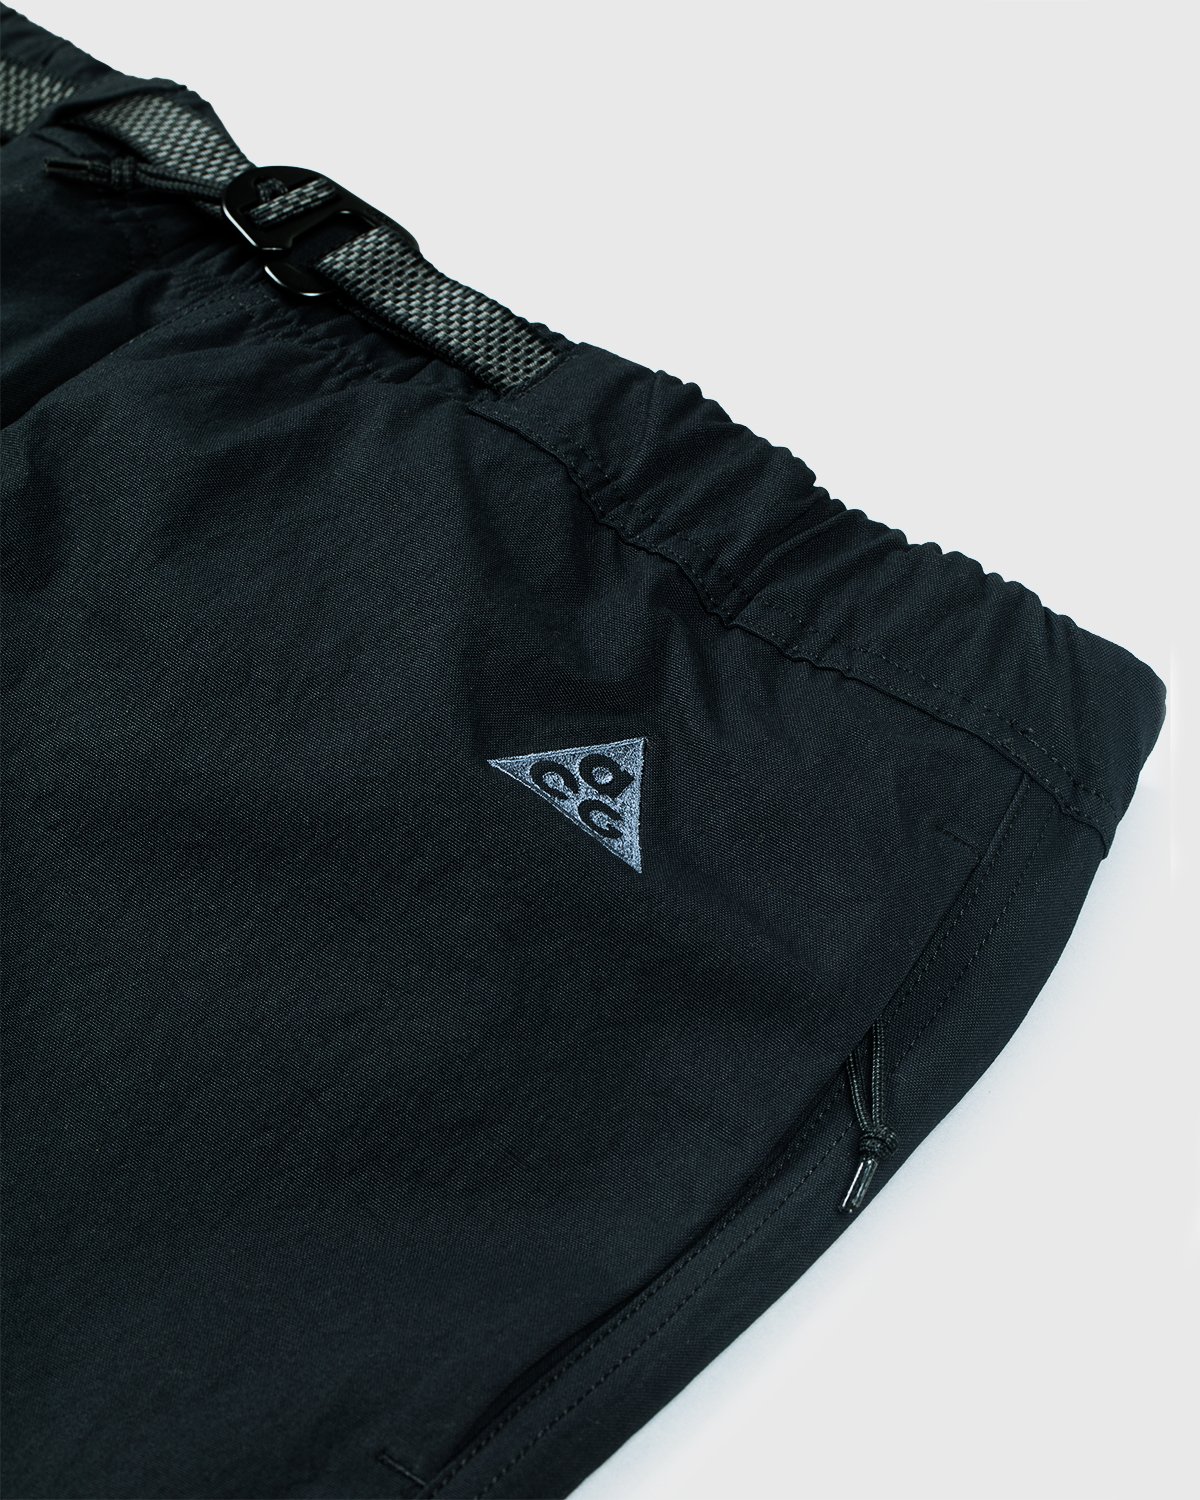 Nike ACG - W NRG ACG Trail Pant Black - Clothing - Black - Image 4